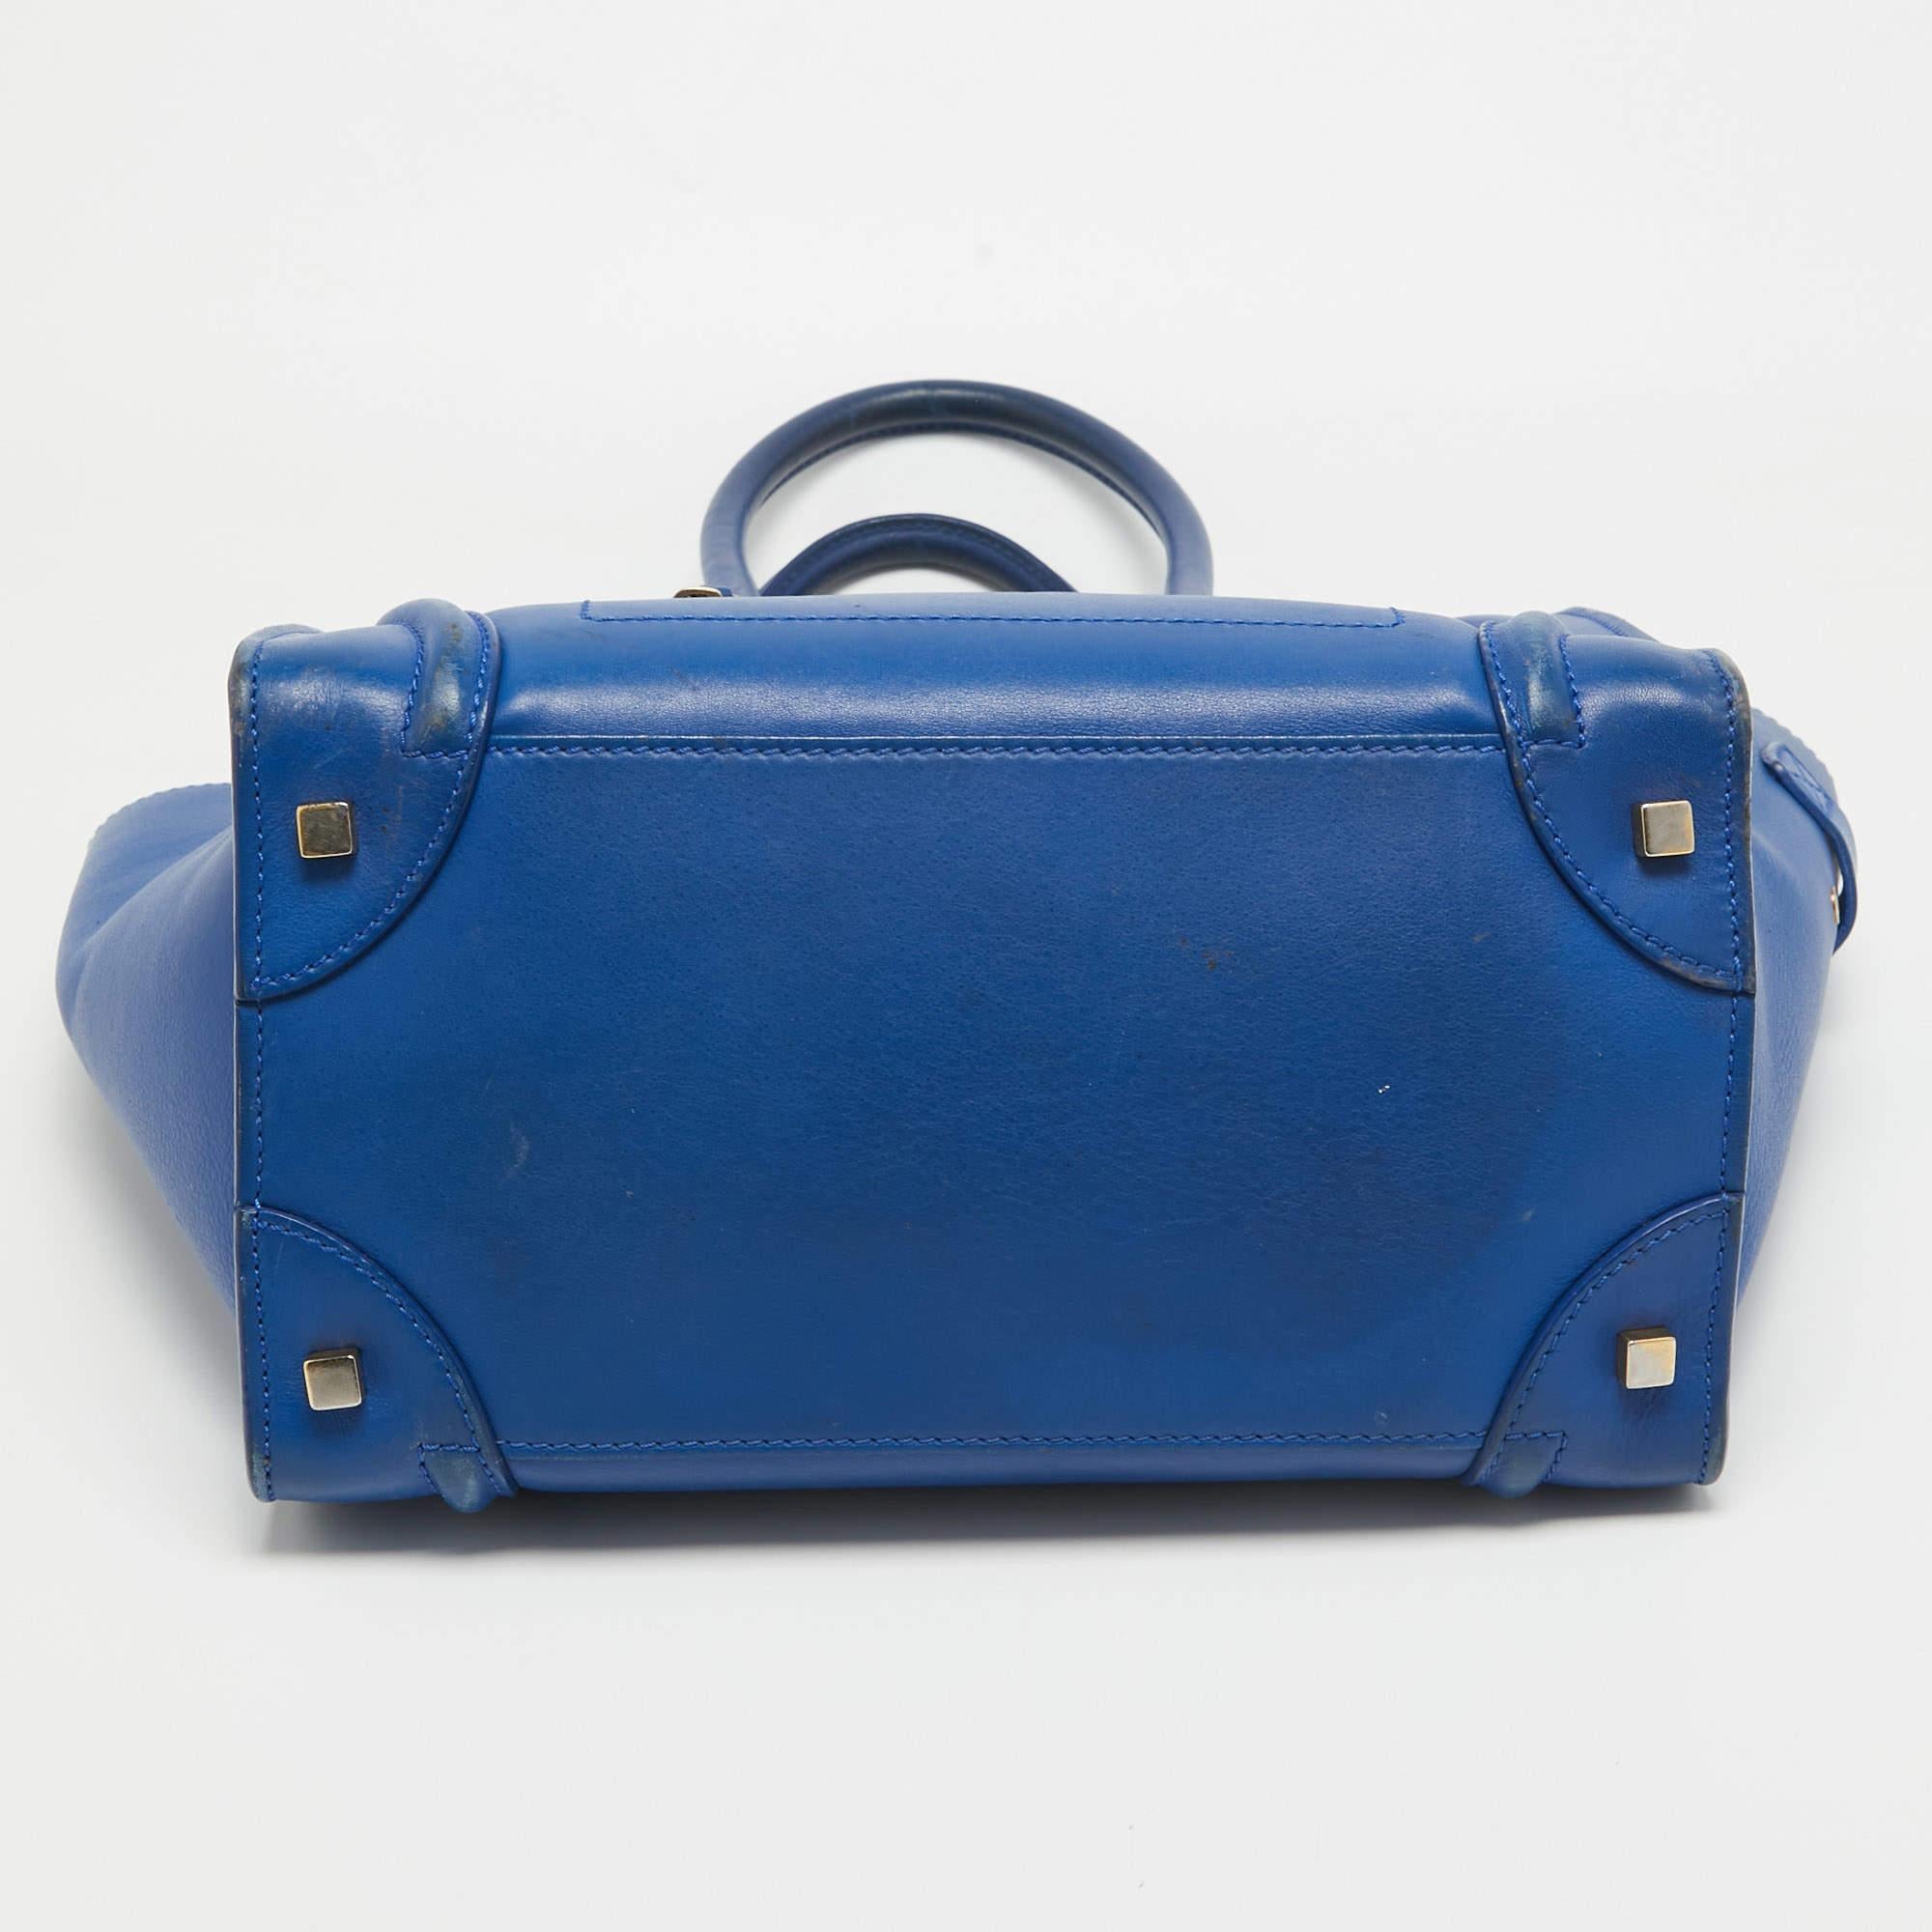 Celine Blue Leather Mini Luggage Tote For Sale 7